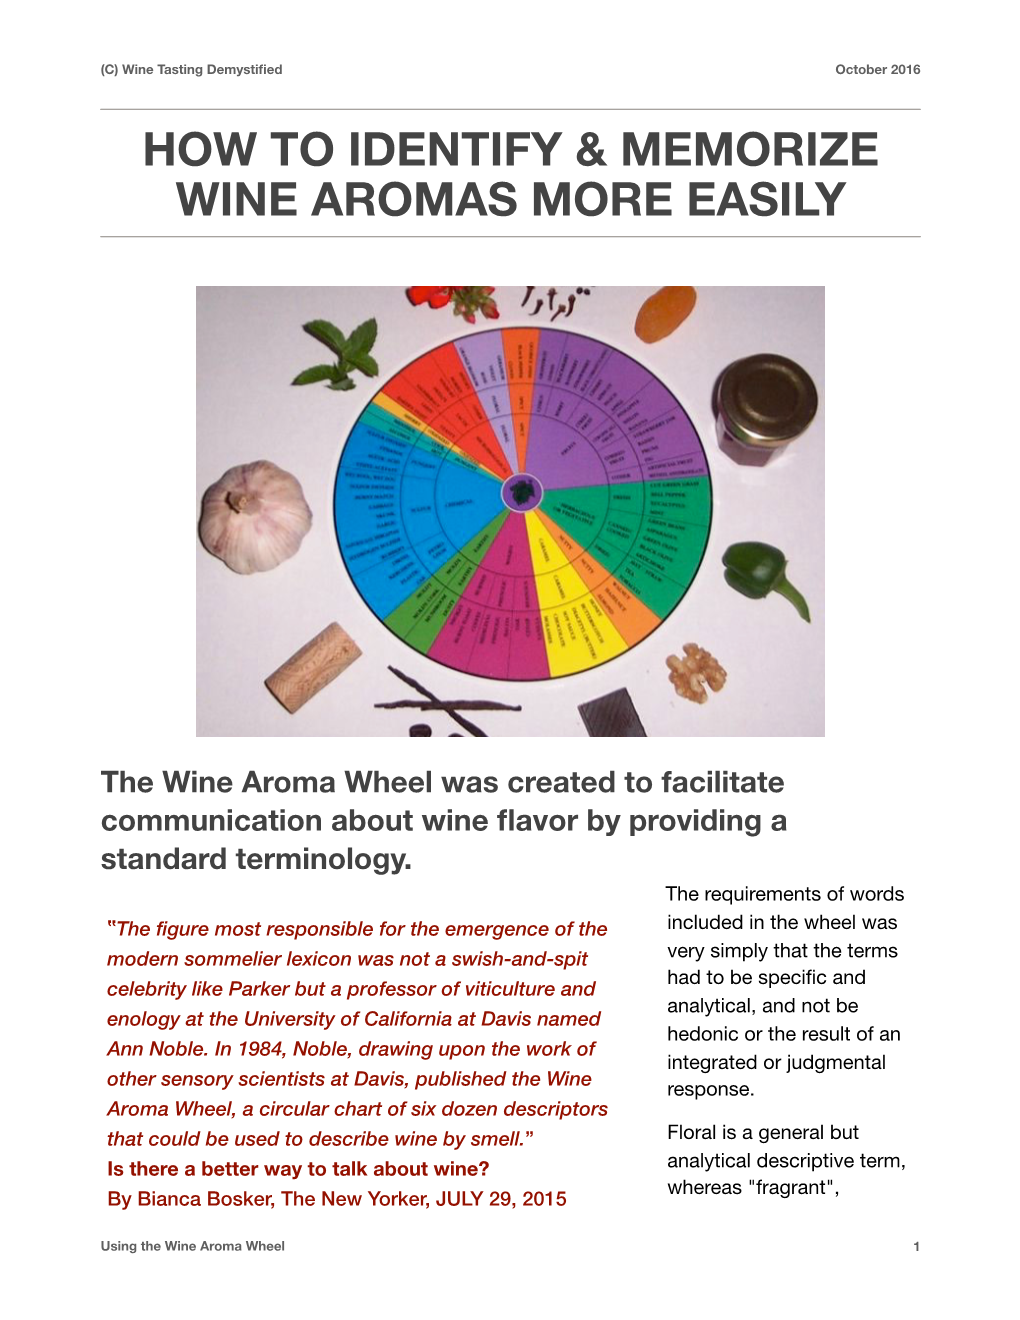 How to Identify & Memorize Wine Aromas More Easily